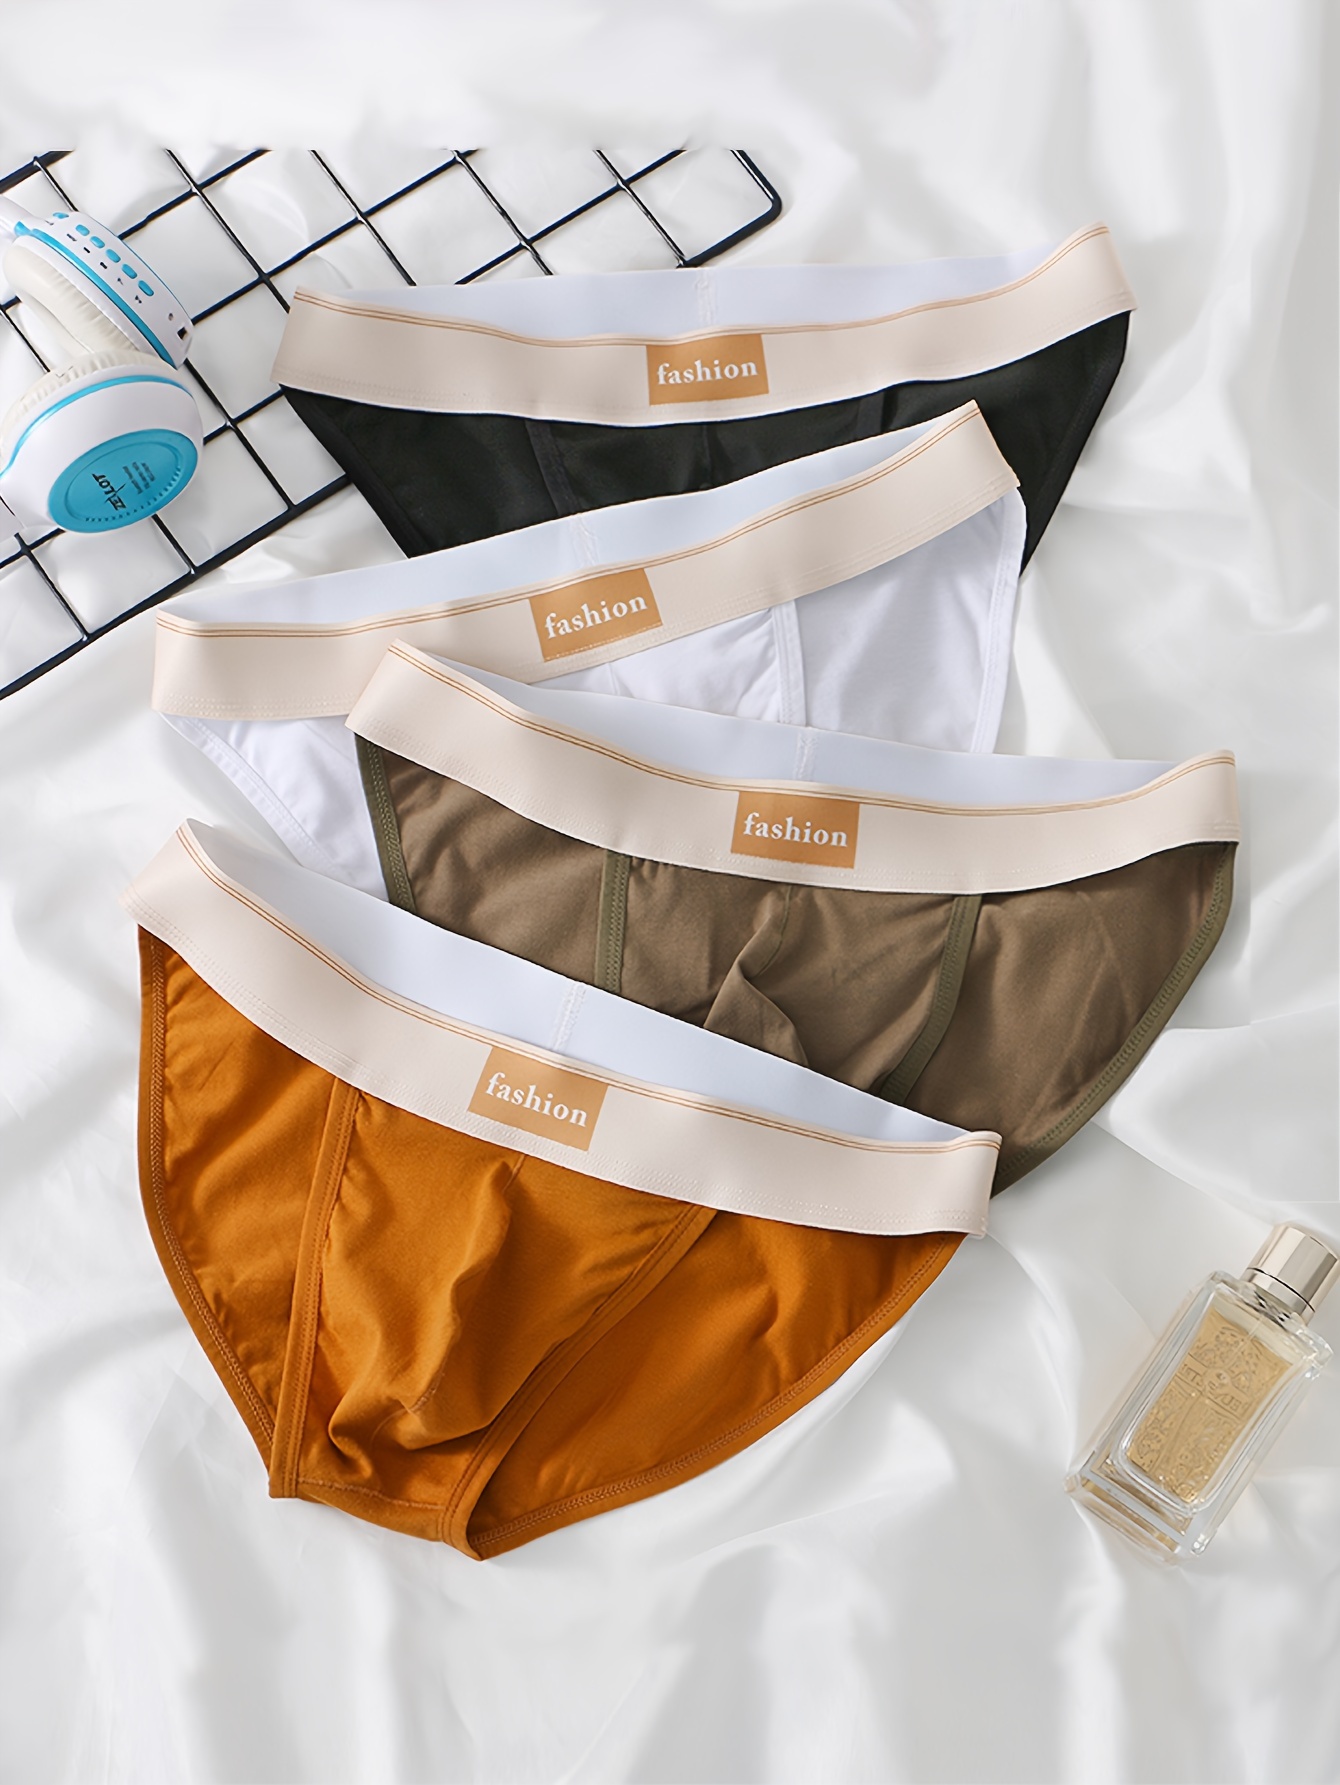 Men's Lace Sexy Cotton Underwear Low Waist Transparent U - Temu